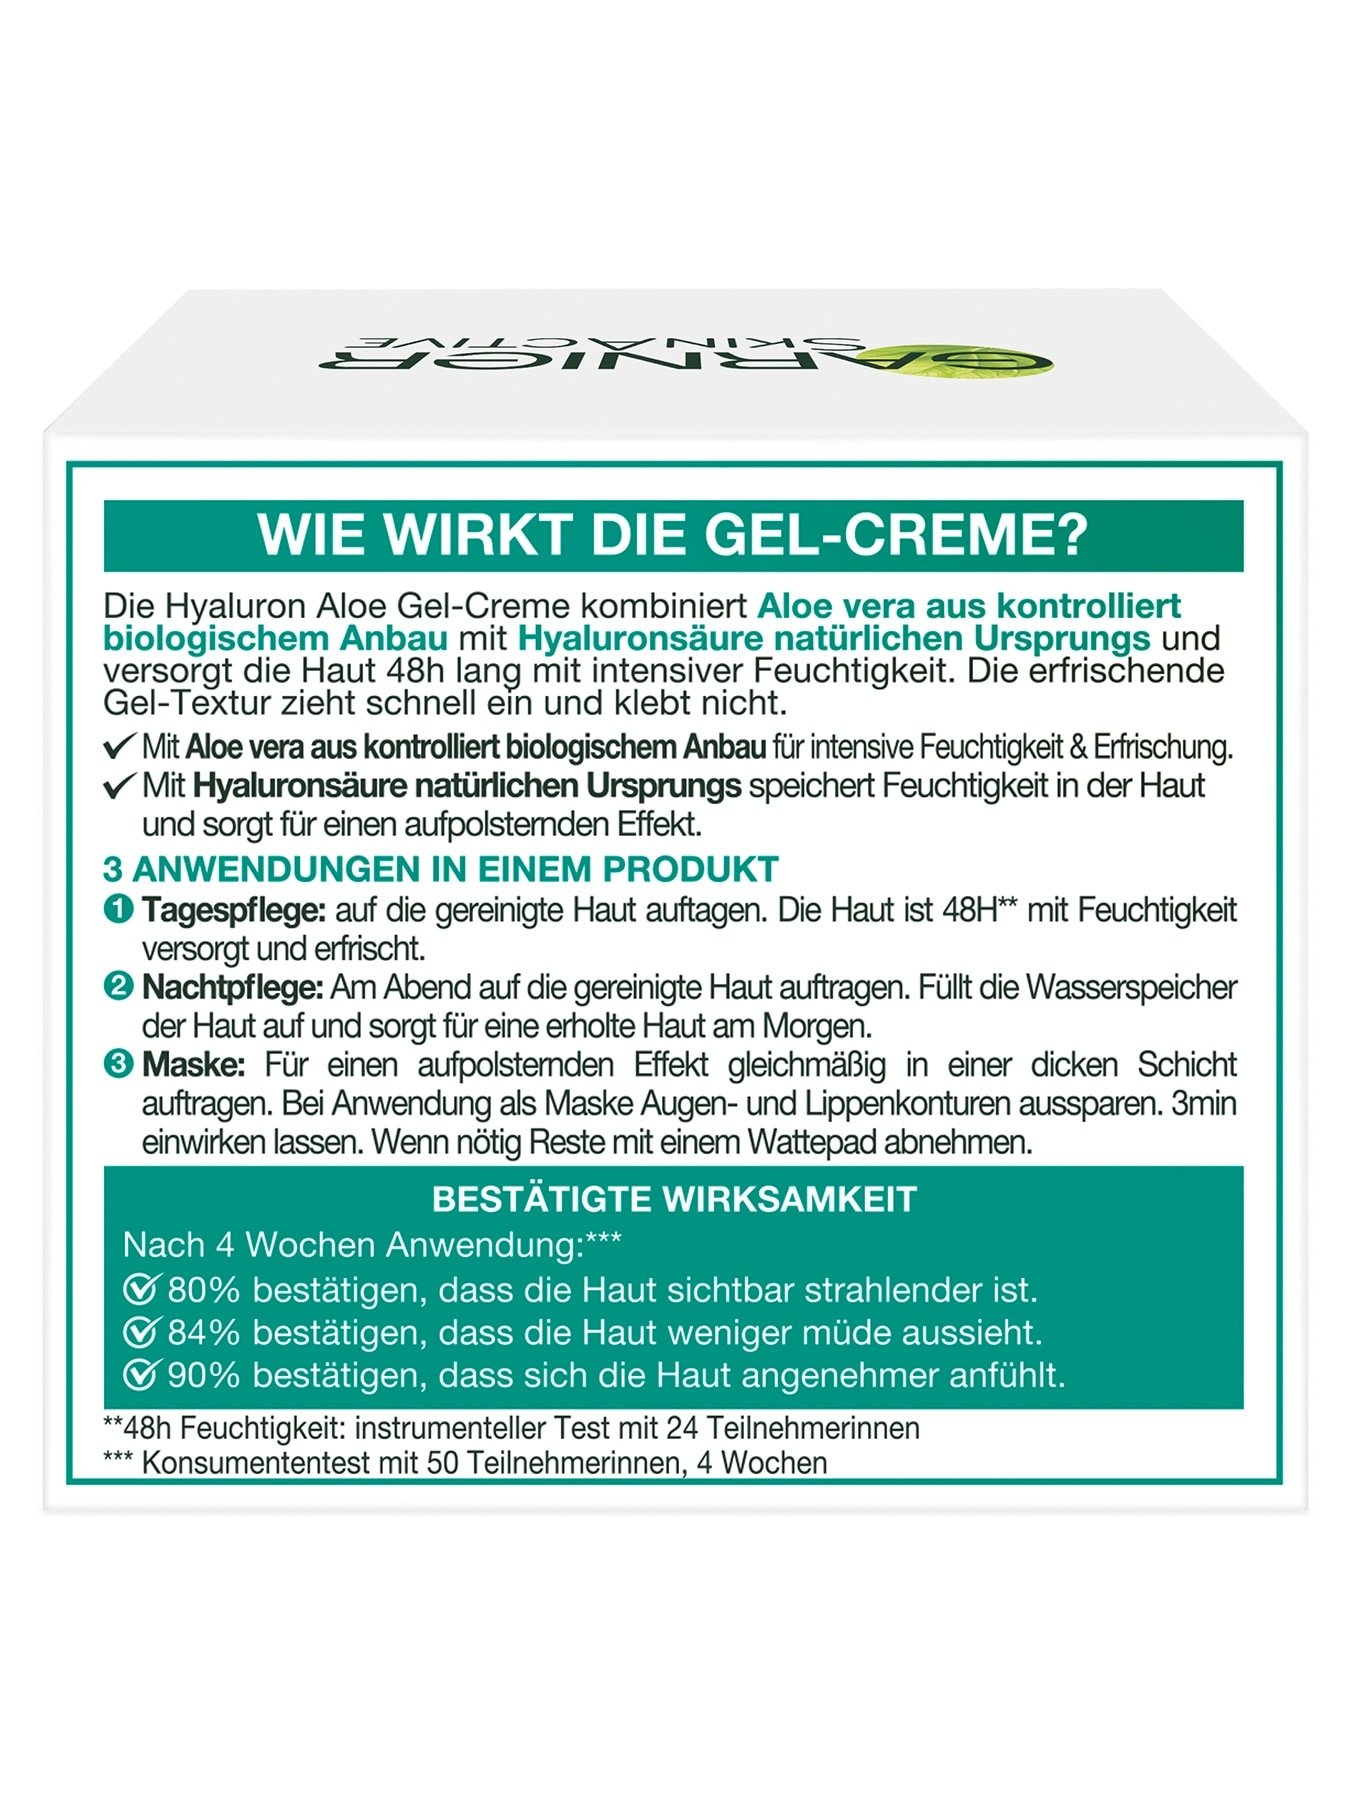 Hyaluron Aloe Gel-Creme Produktbild Wirksamkeit